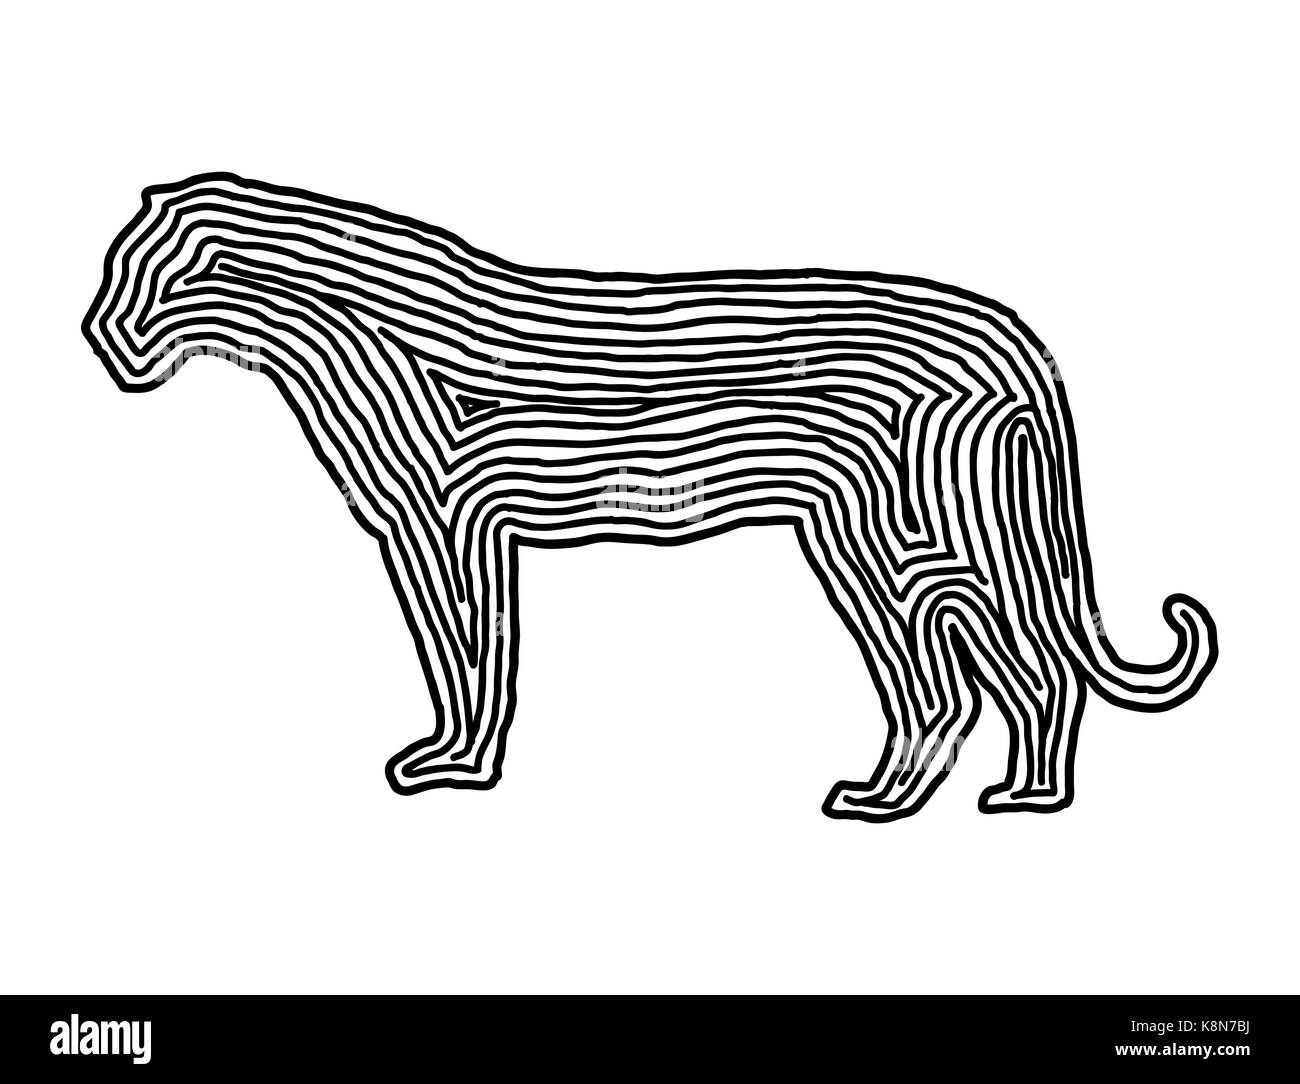 A tiger illustration icon in black offset line. Fingerprint style for logo or background design. Stock Vector